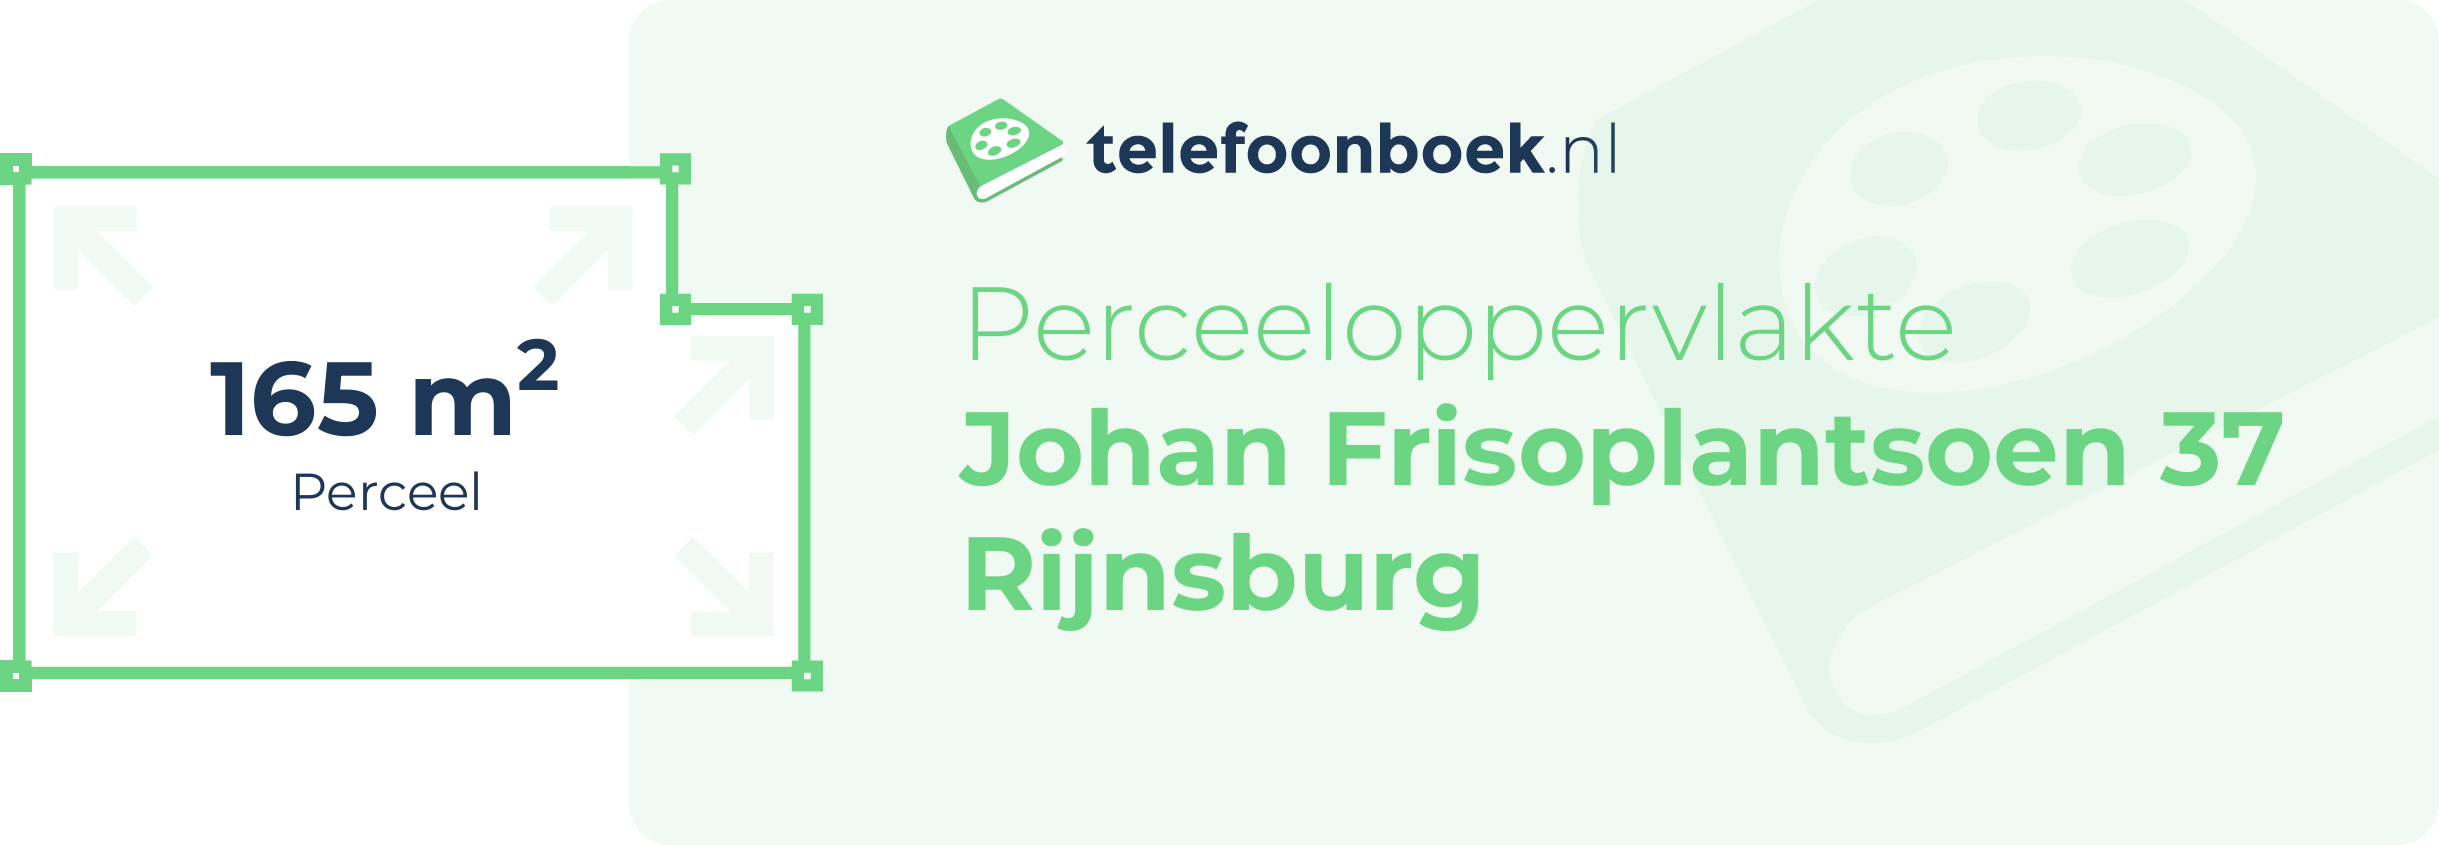 Perceeloppervlakte Johan Frisoplantsoen 37 Rijnsburg